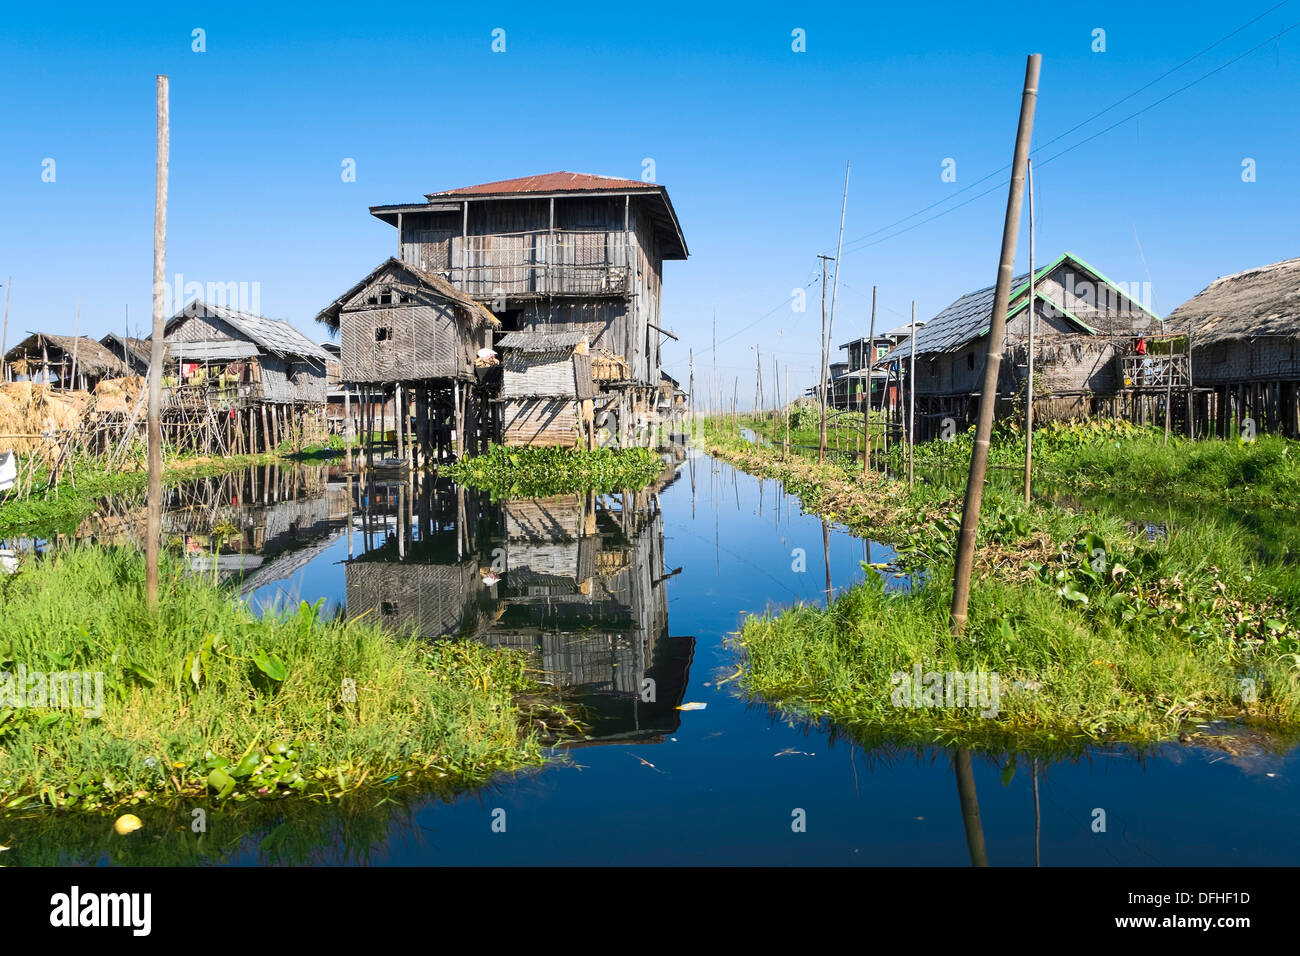 Stilt houses in village on Inle Lake, Myanmar, Asia Stock Photo